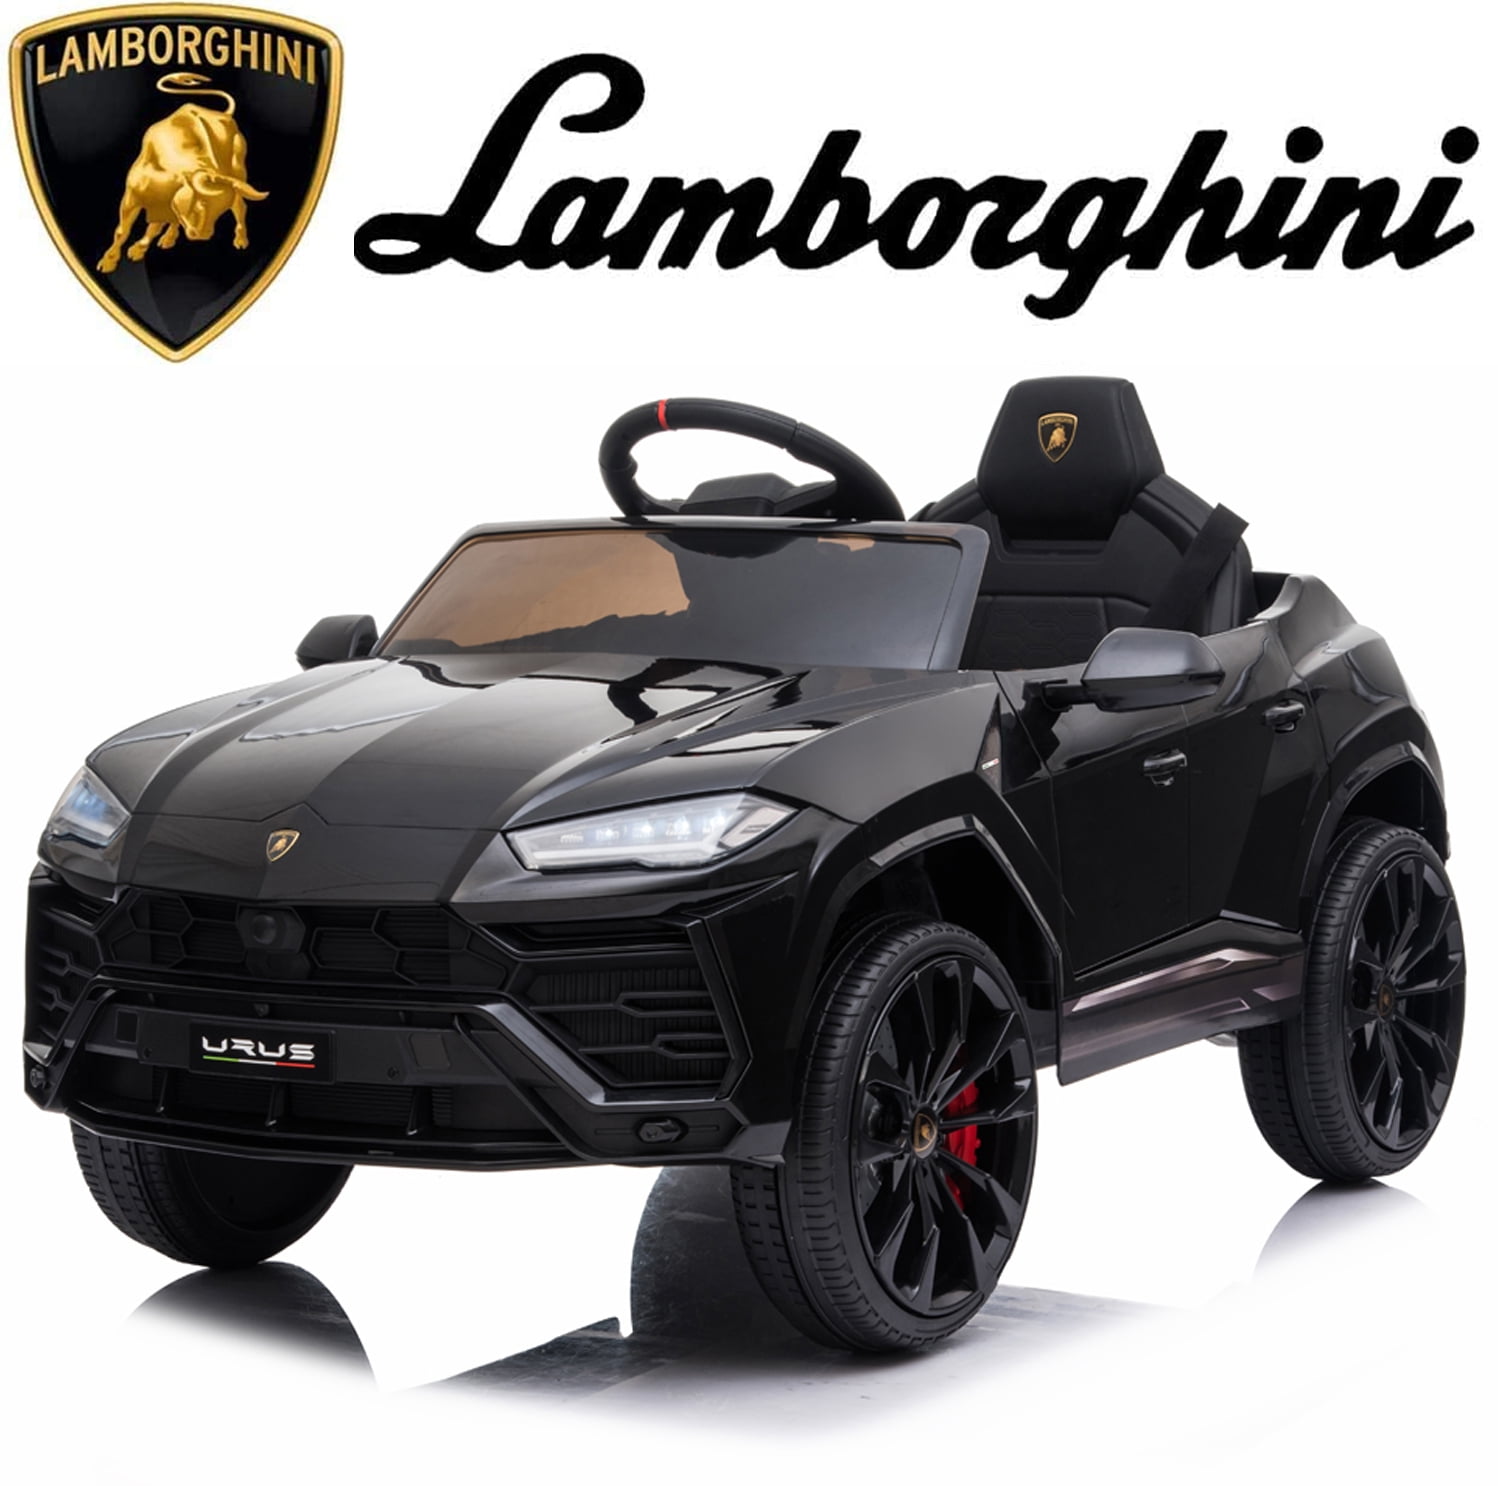 Lamborghini Ride on Cars, Power 4 Wheels Kids Ride on Toy ...